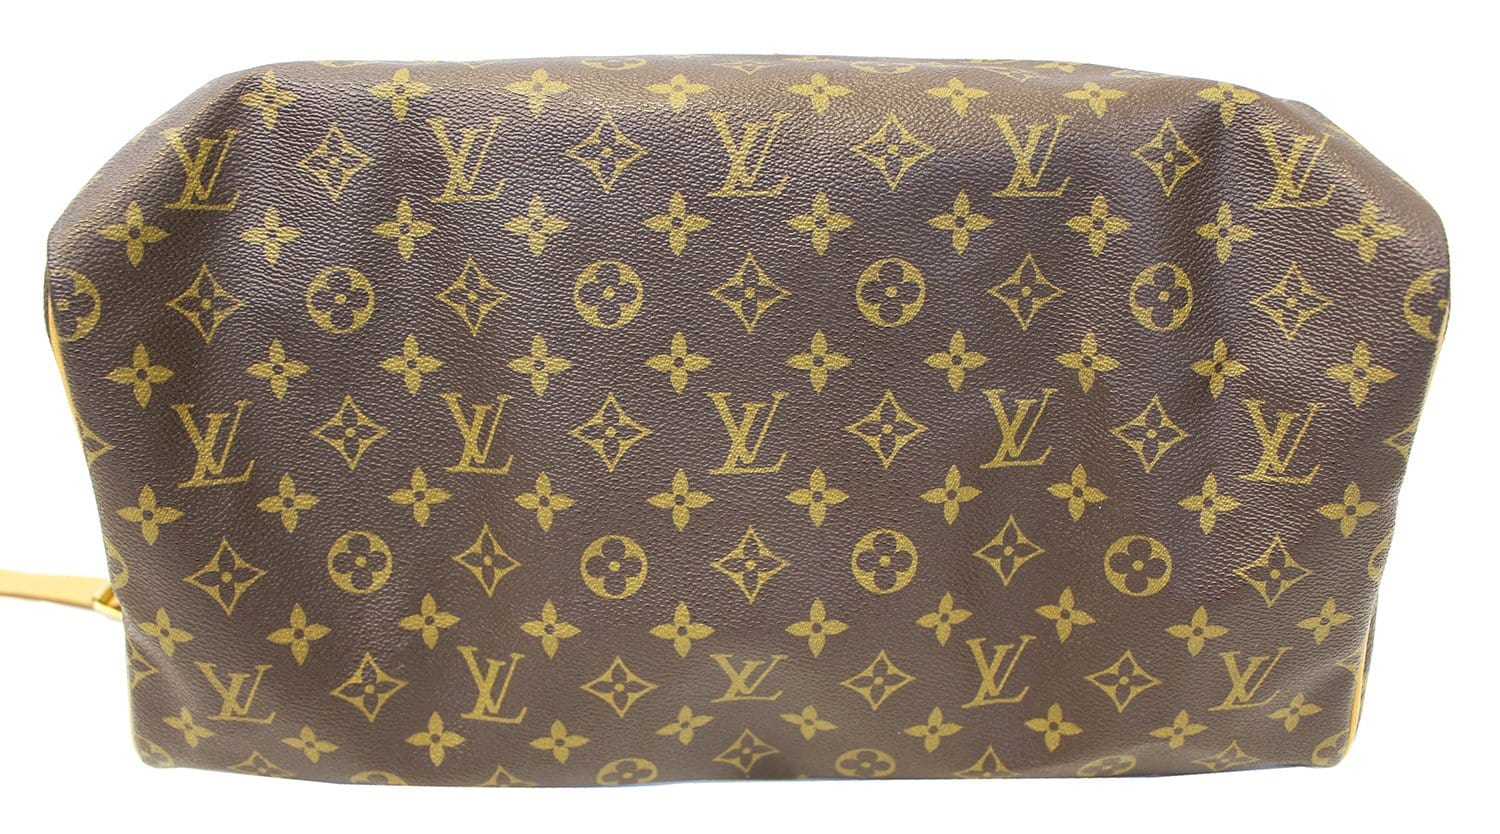 Louis Vuitton Speedy Handbag 340878